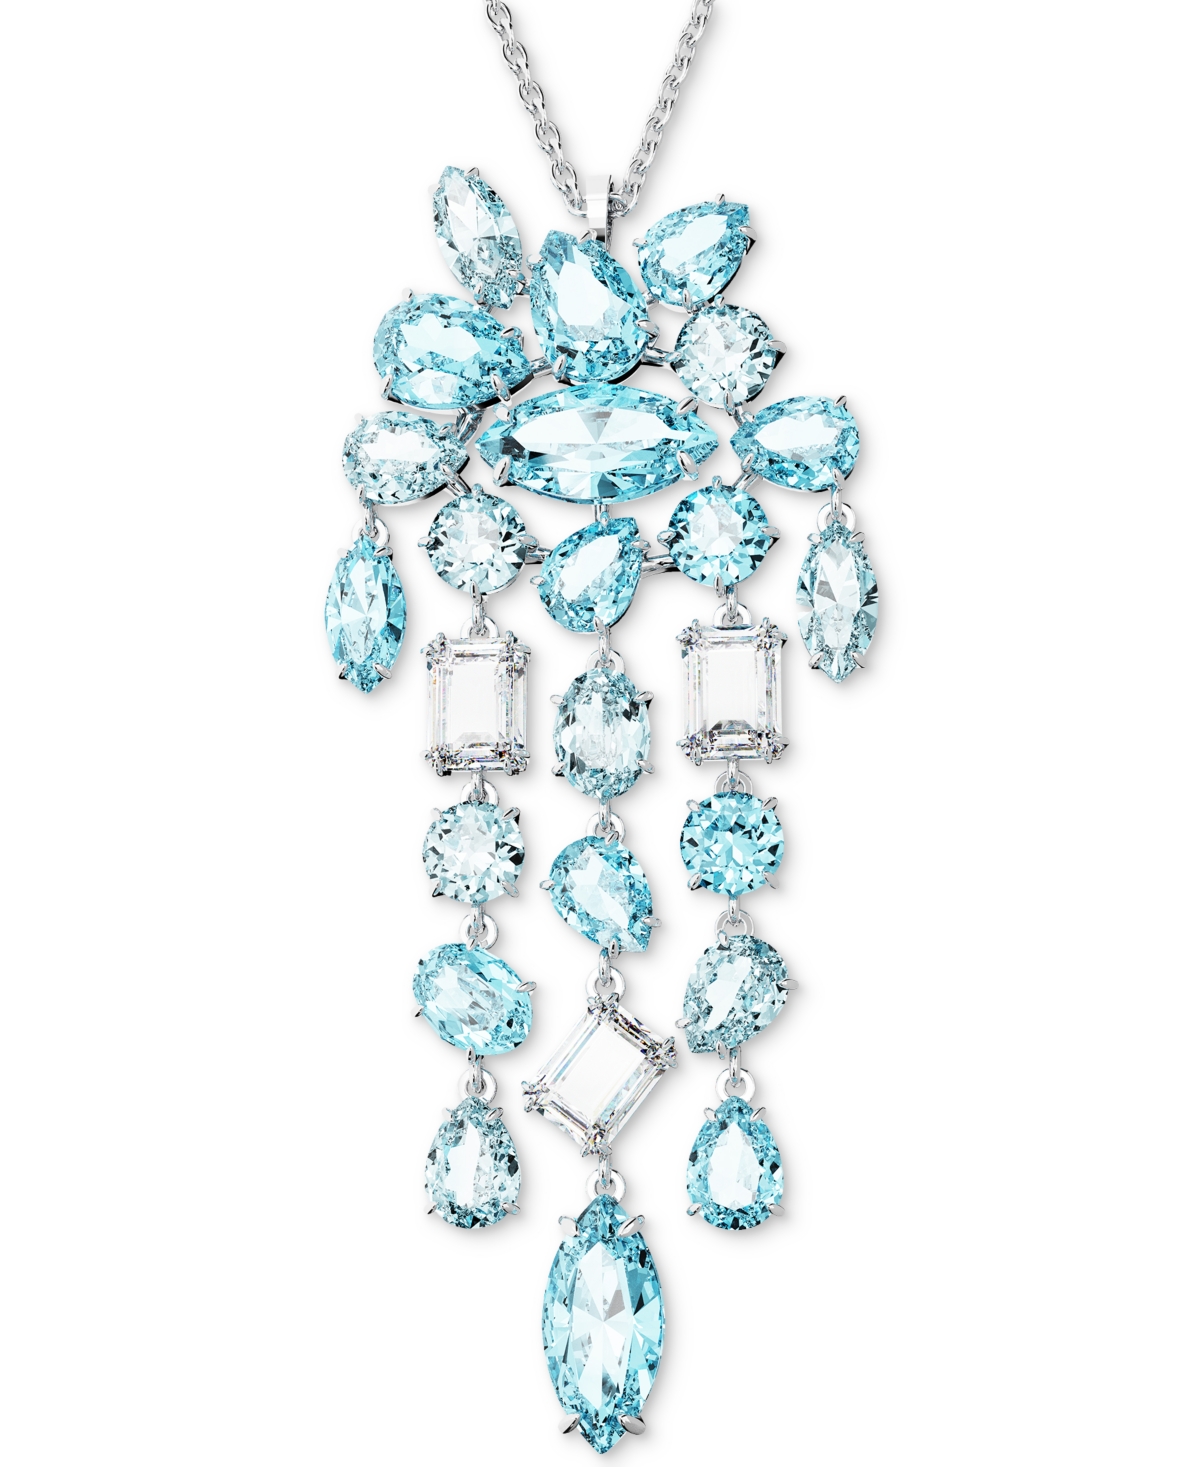 Silver-Tone Gema Blue Crystal Chandelier Pendant Necklace, 17-3/4" + 8" extender - Blue